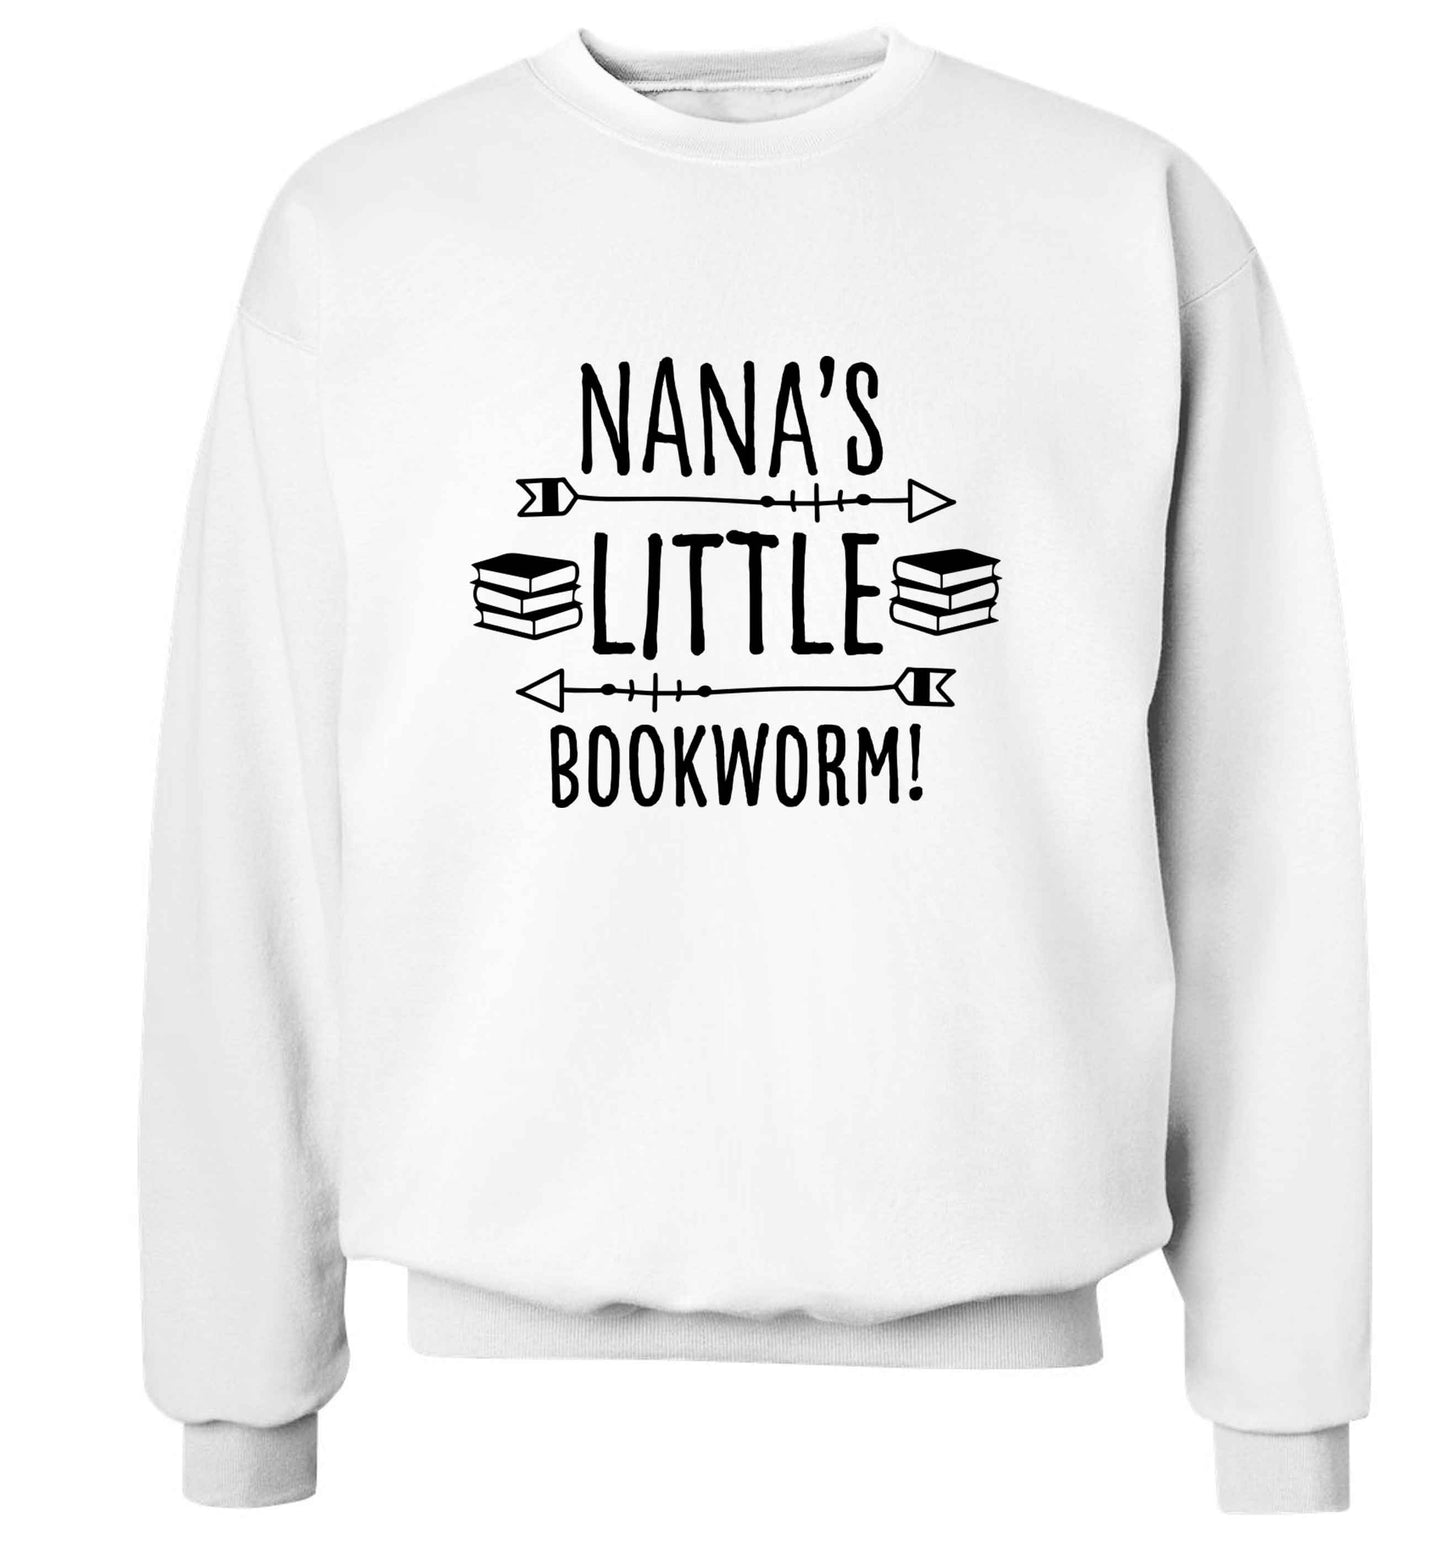 Nana's little bookworm adult's unisex white sweater 2XL